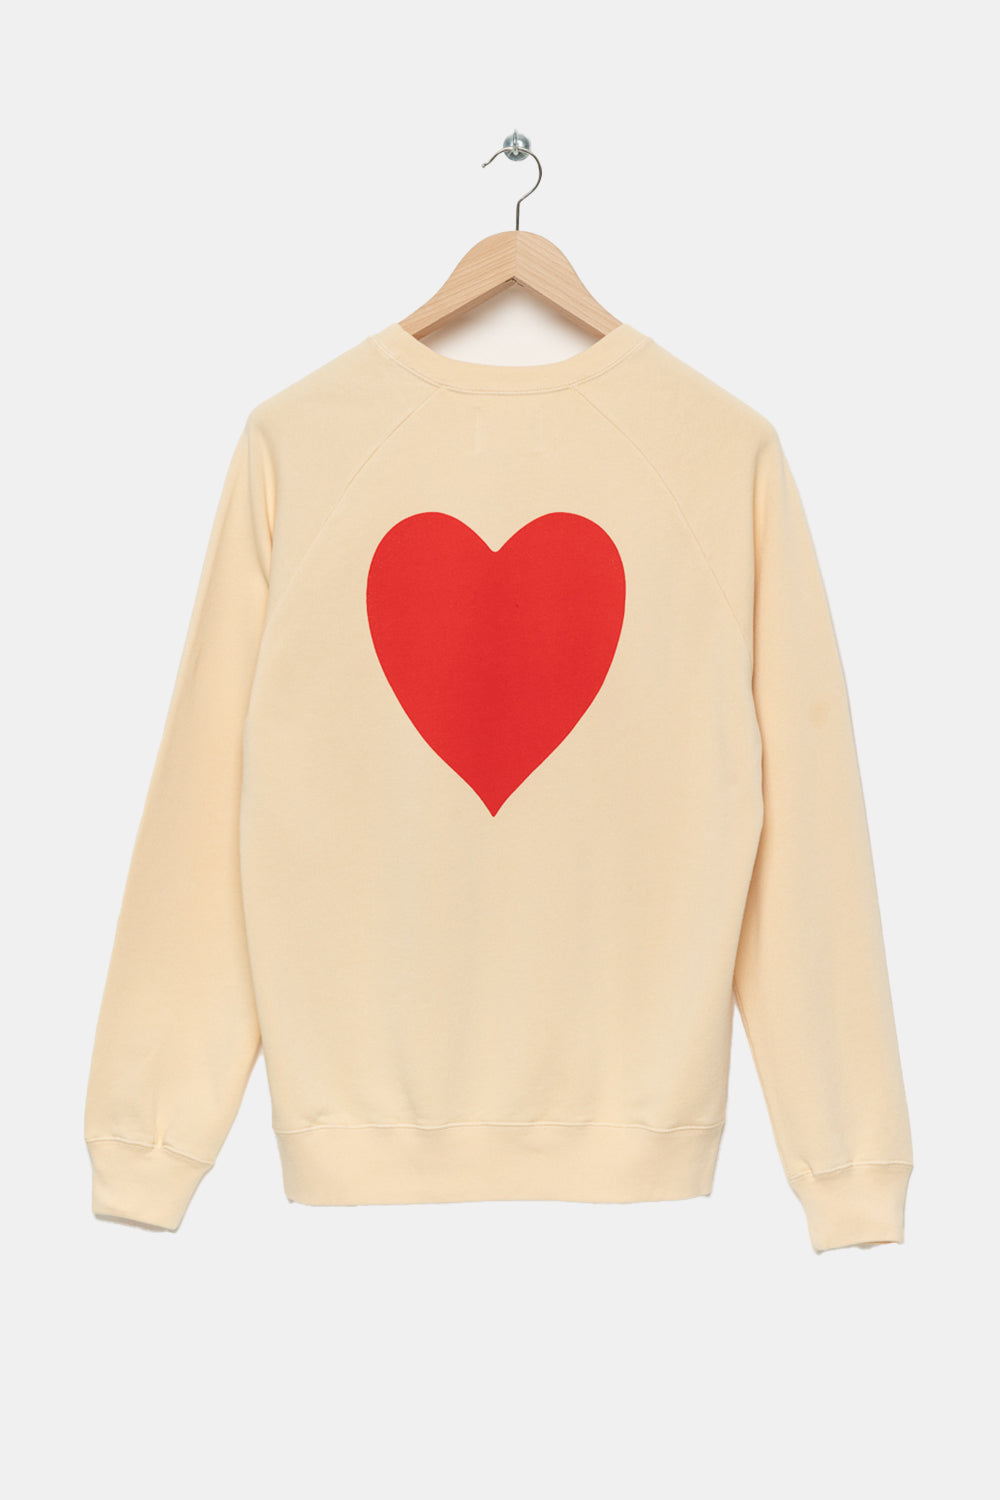 La Paz Cunha Sweatshirt (Hearts Ecru)